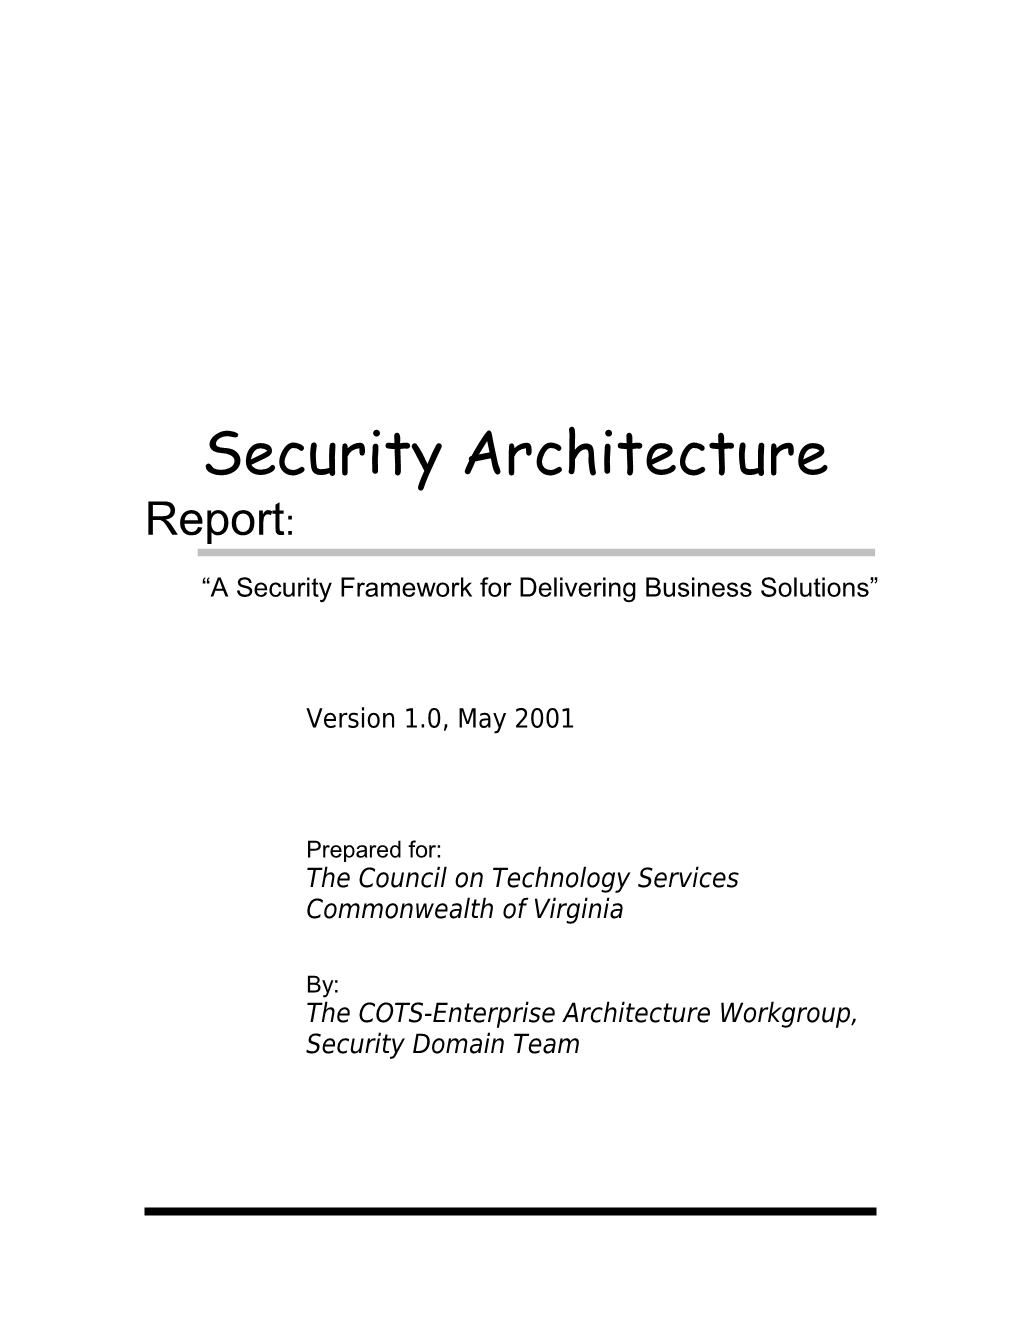 A Security Framework for Delivering Business Solutions